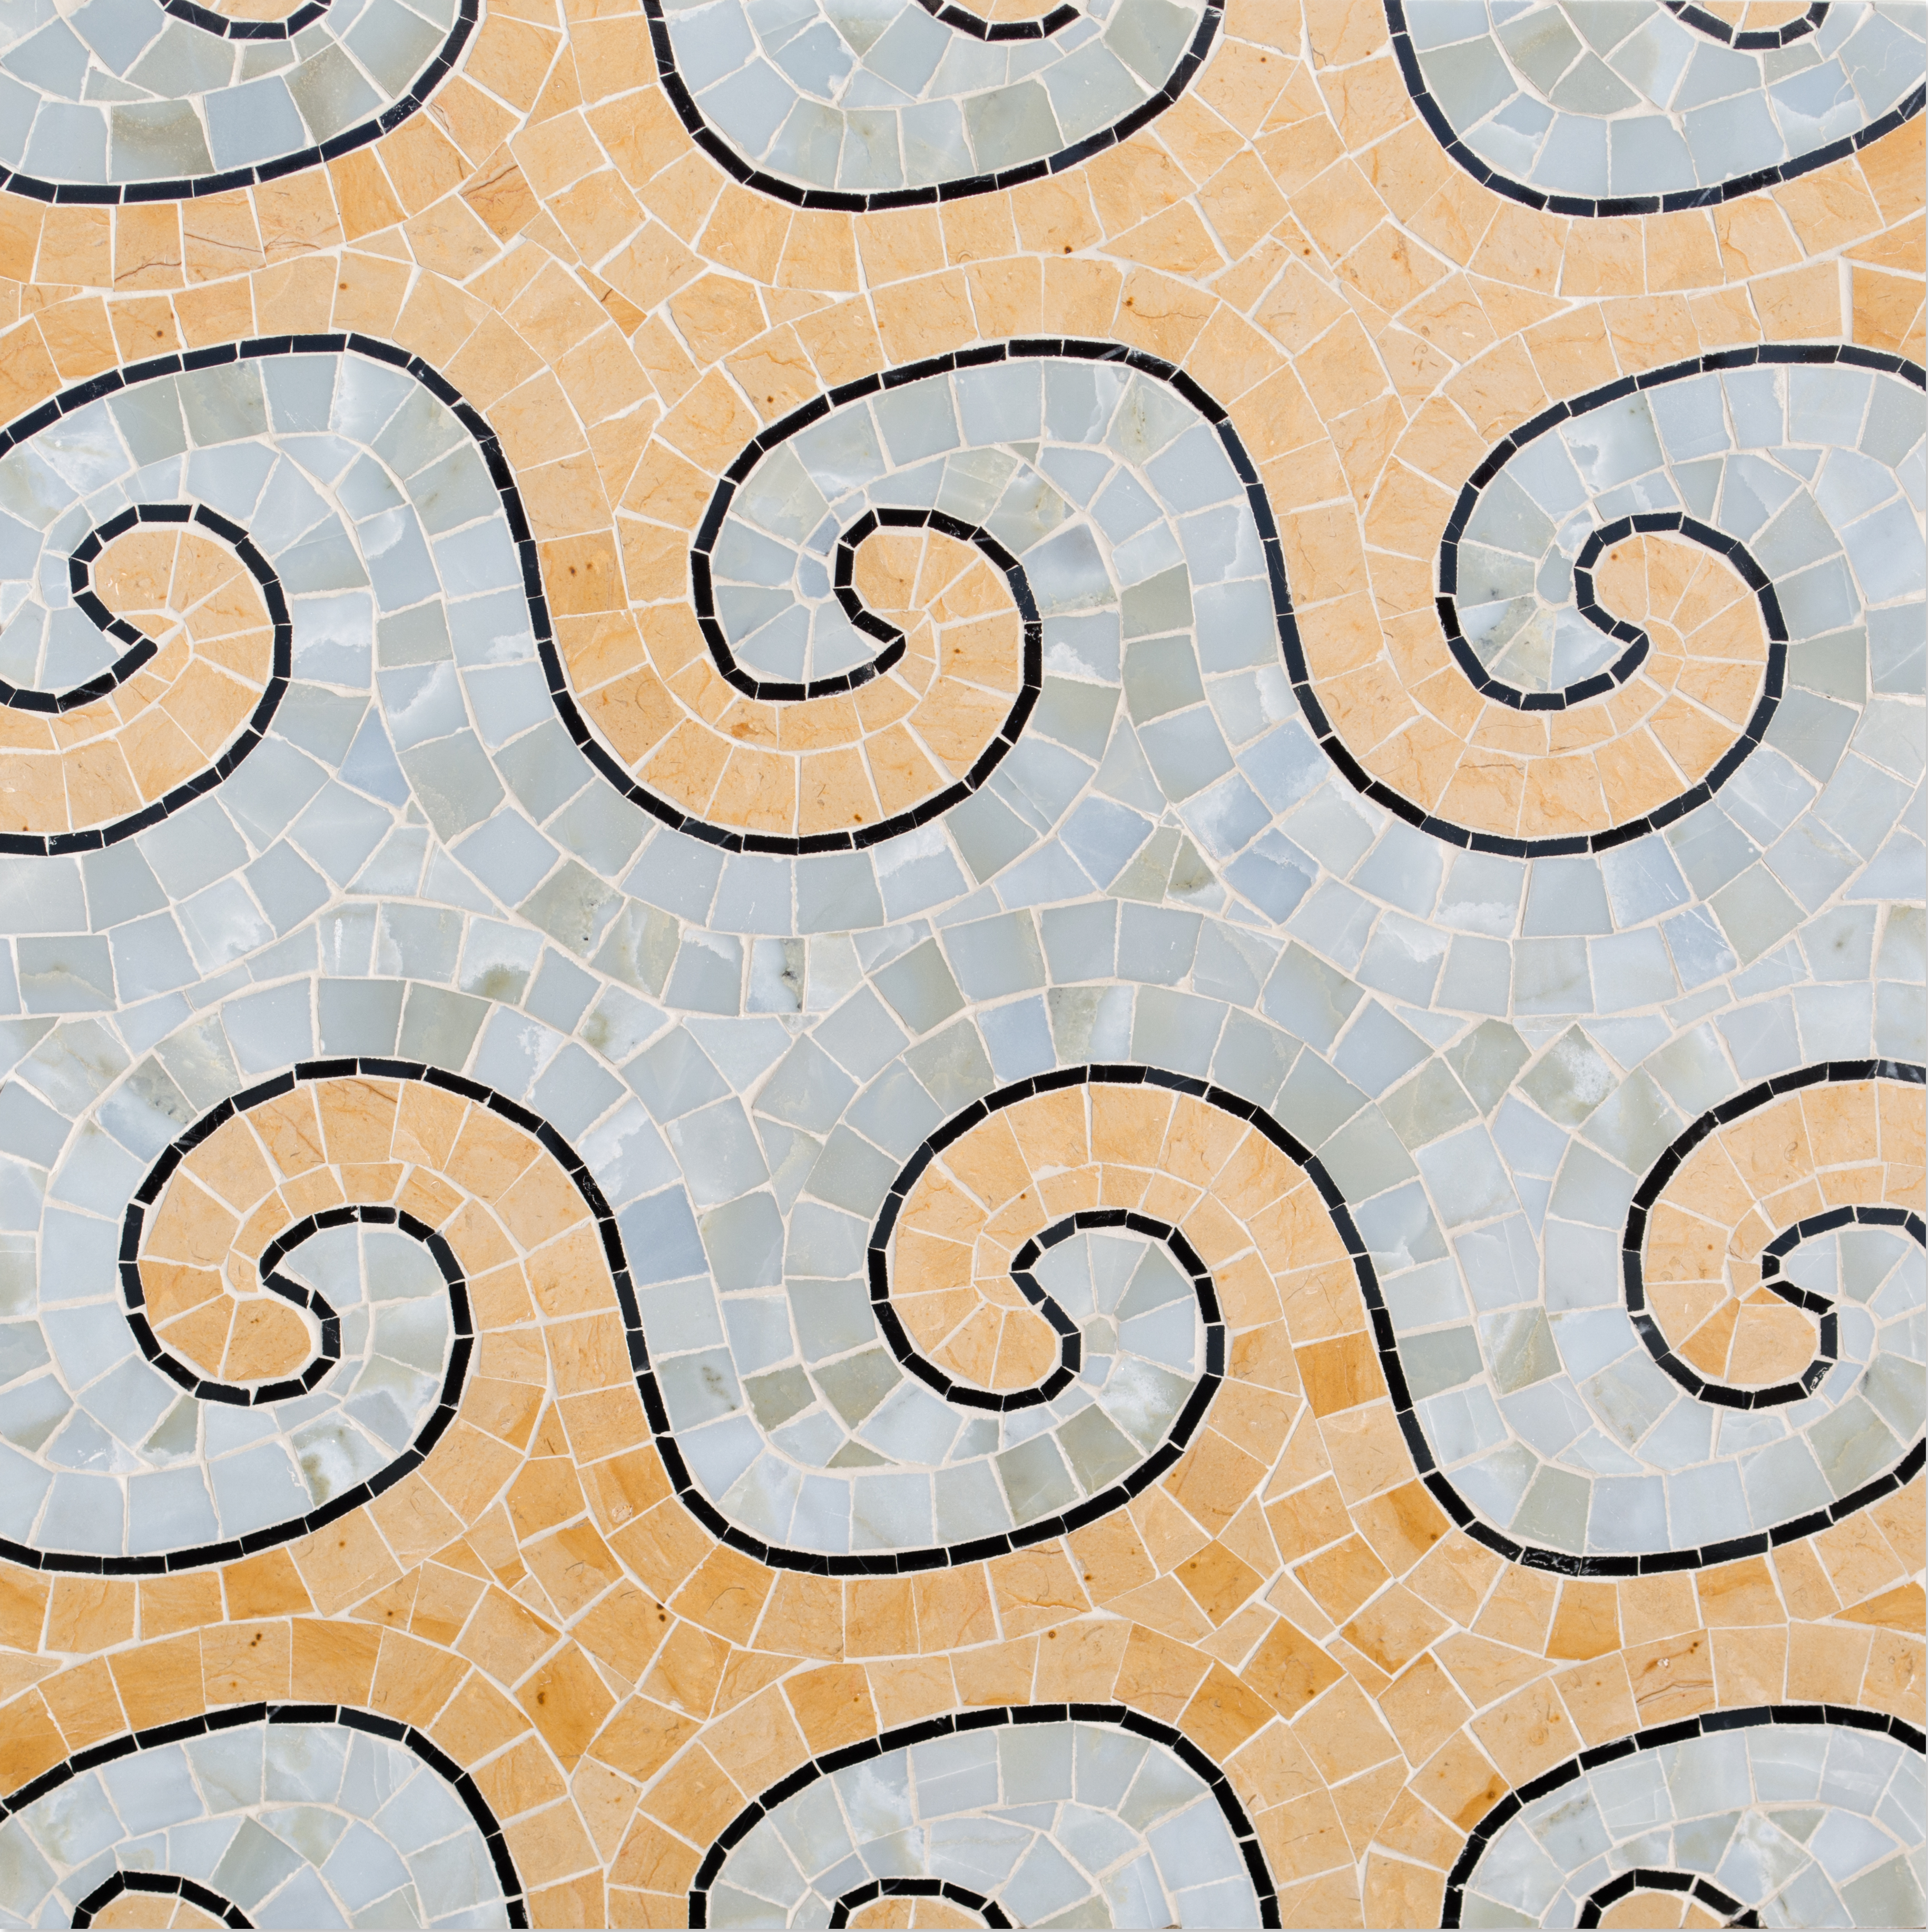 Classic Wave PC mosaic pattern designed by joni vanderslice for New Ravenna